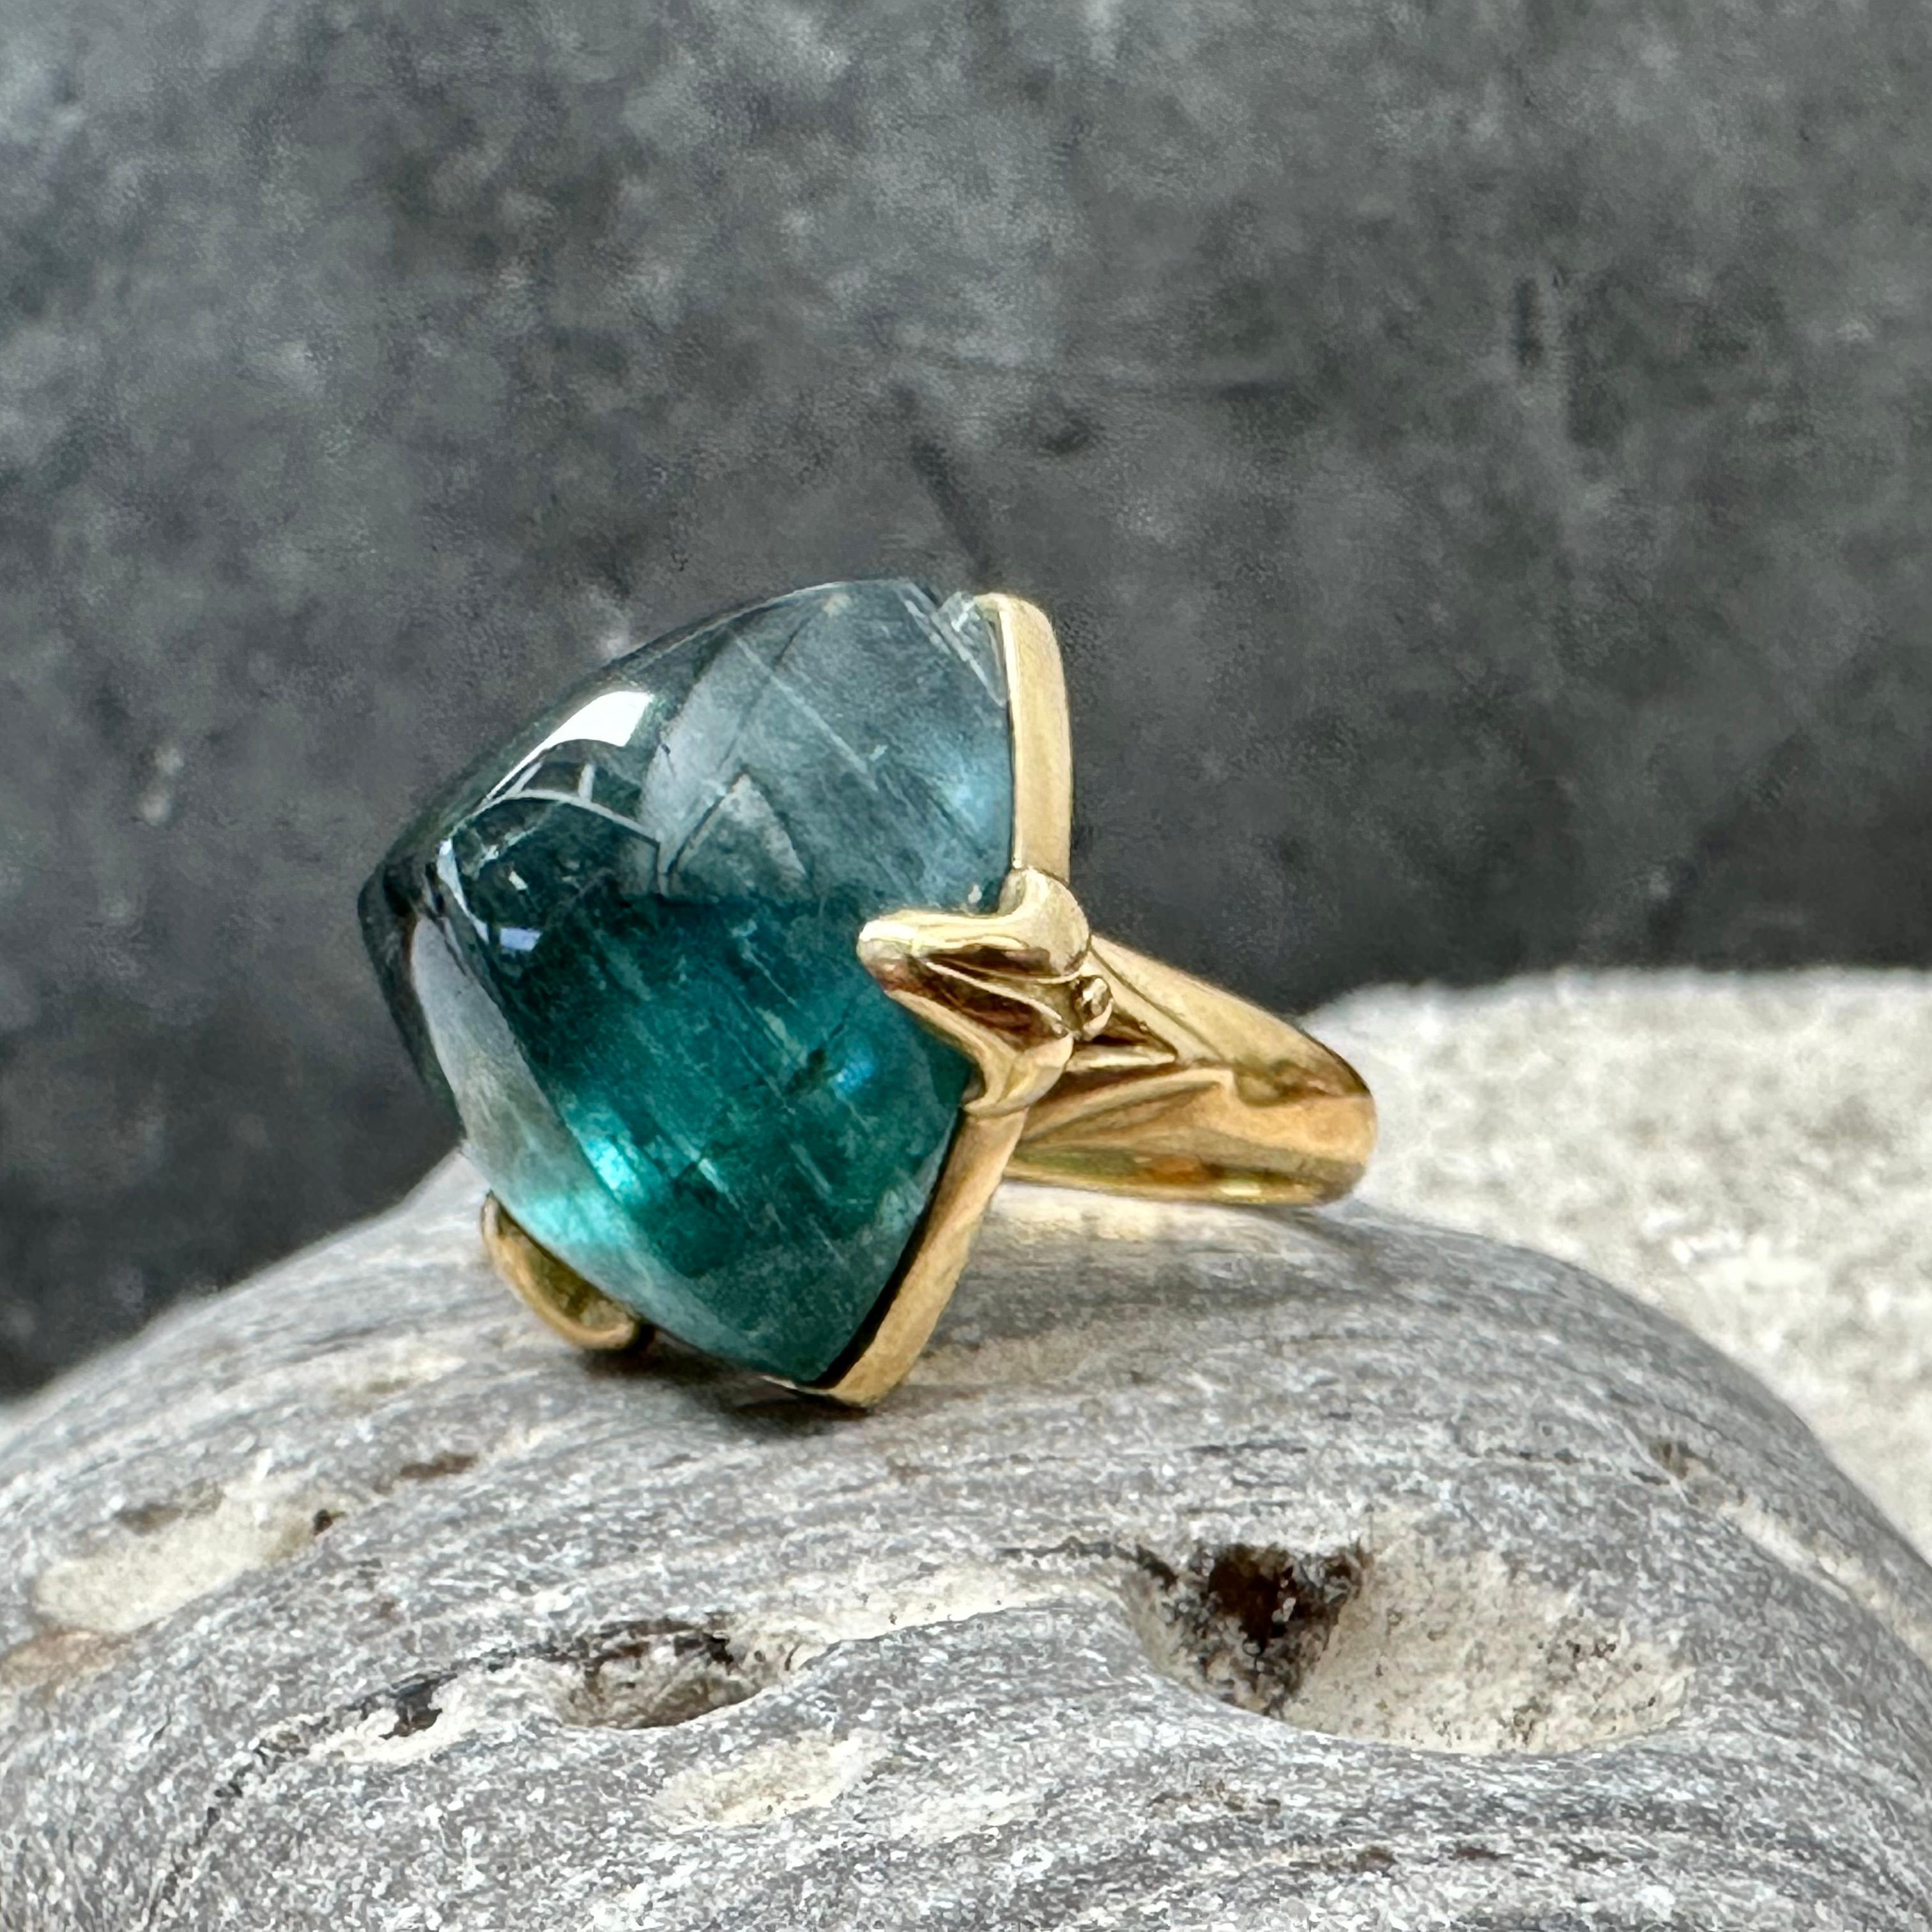 Steven Battelle 30.2 Carats Blue-Green Indicolite Tourmaline 18k Gold Ring For Sale 1